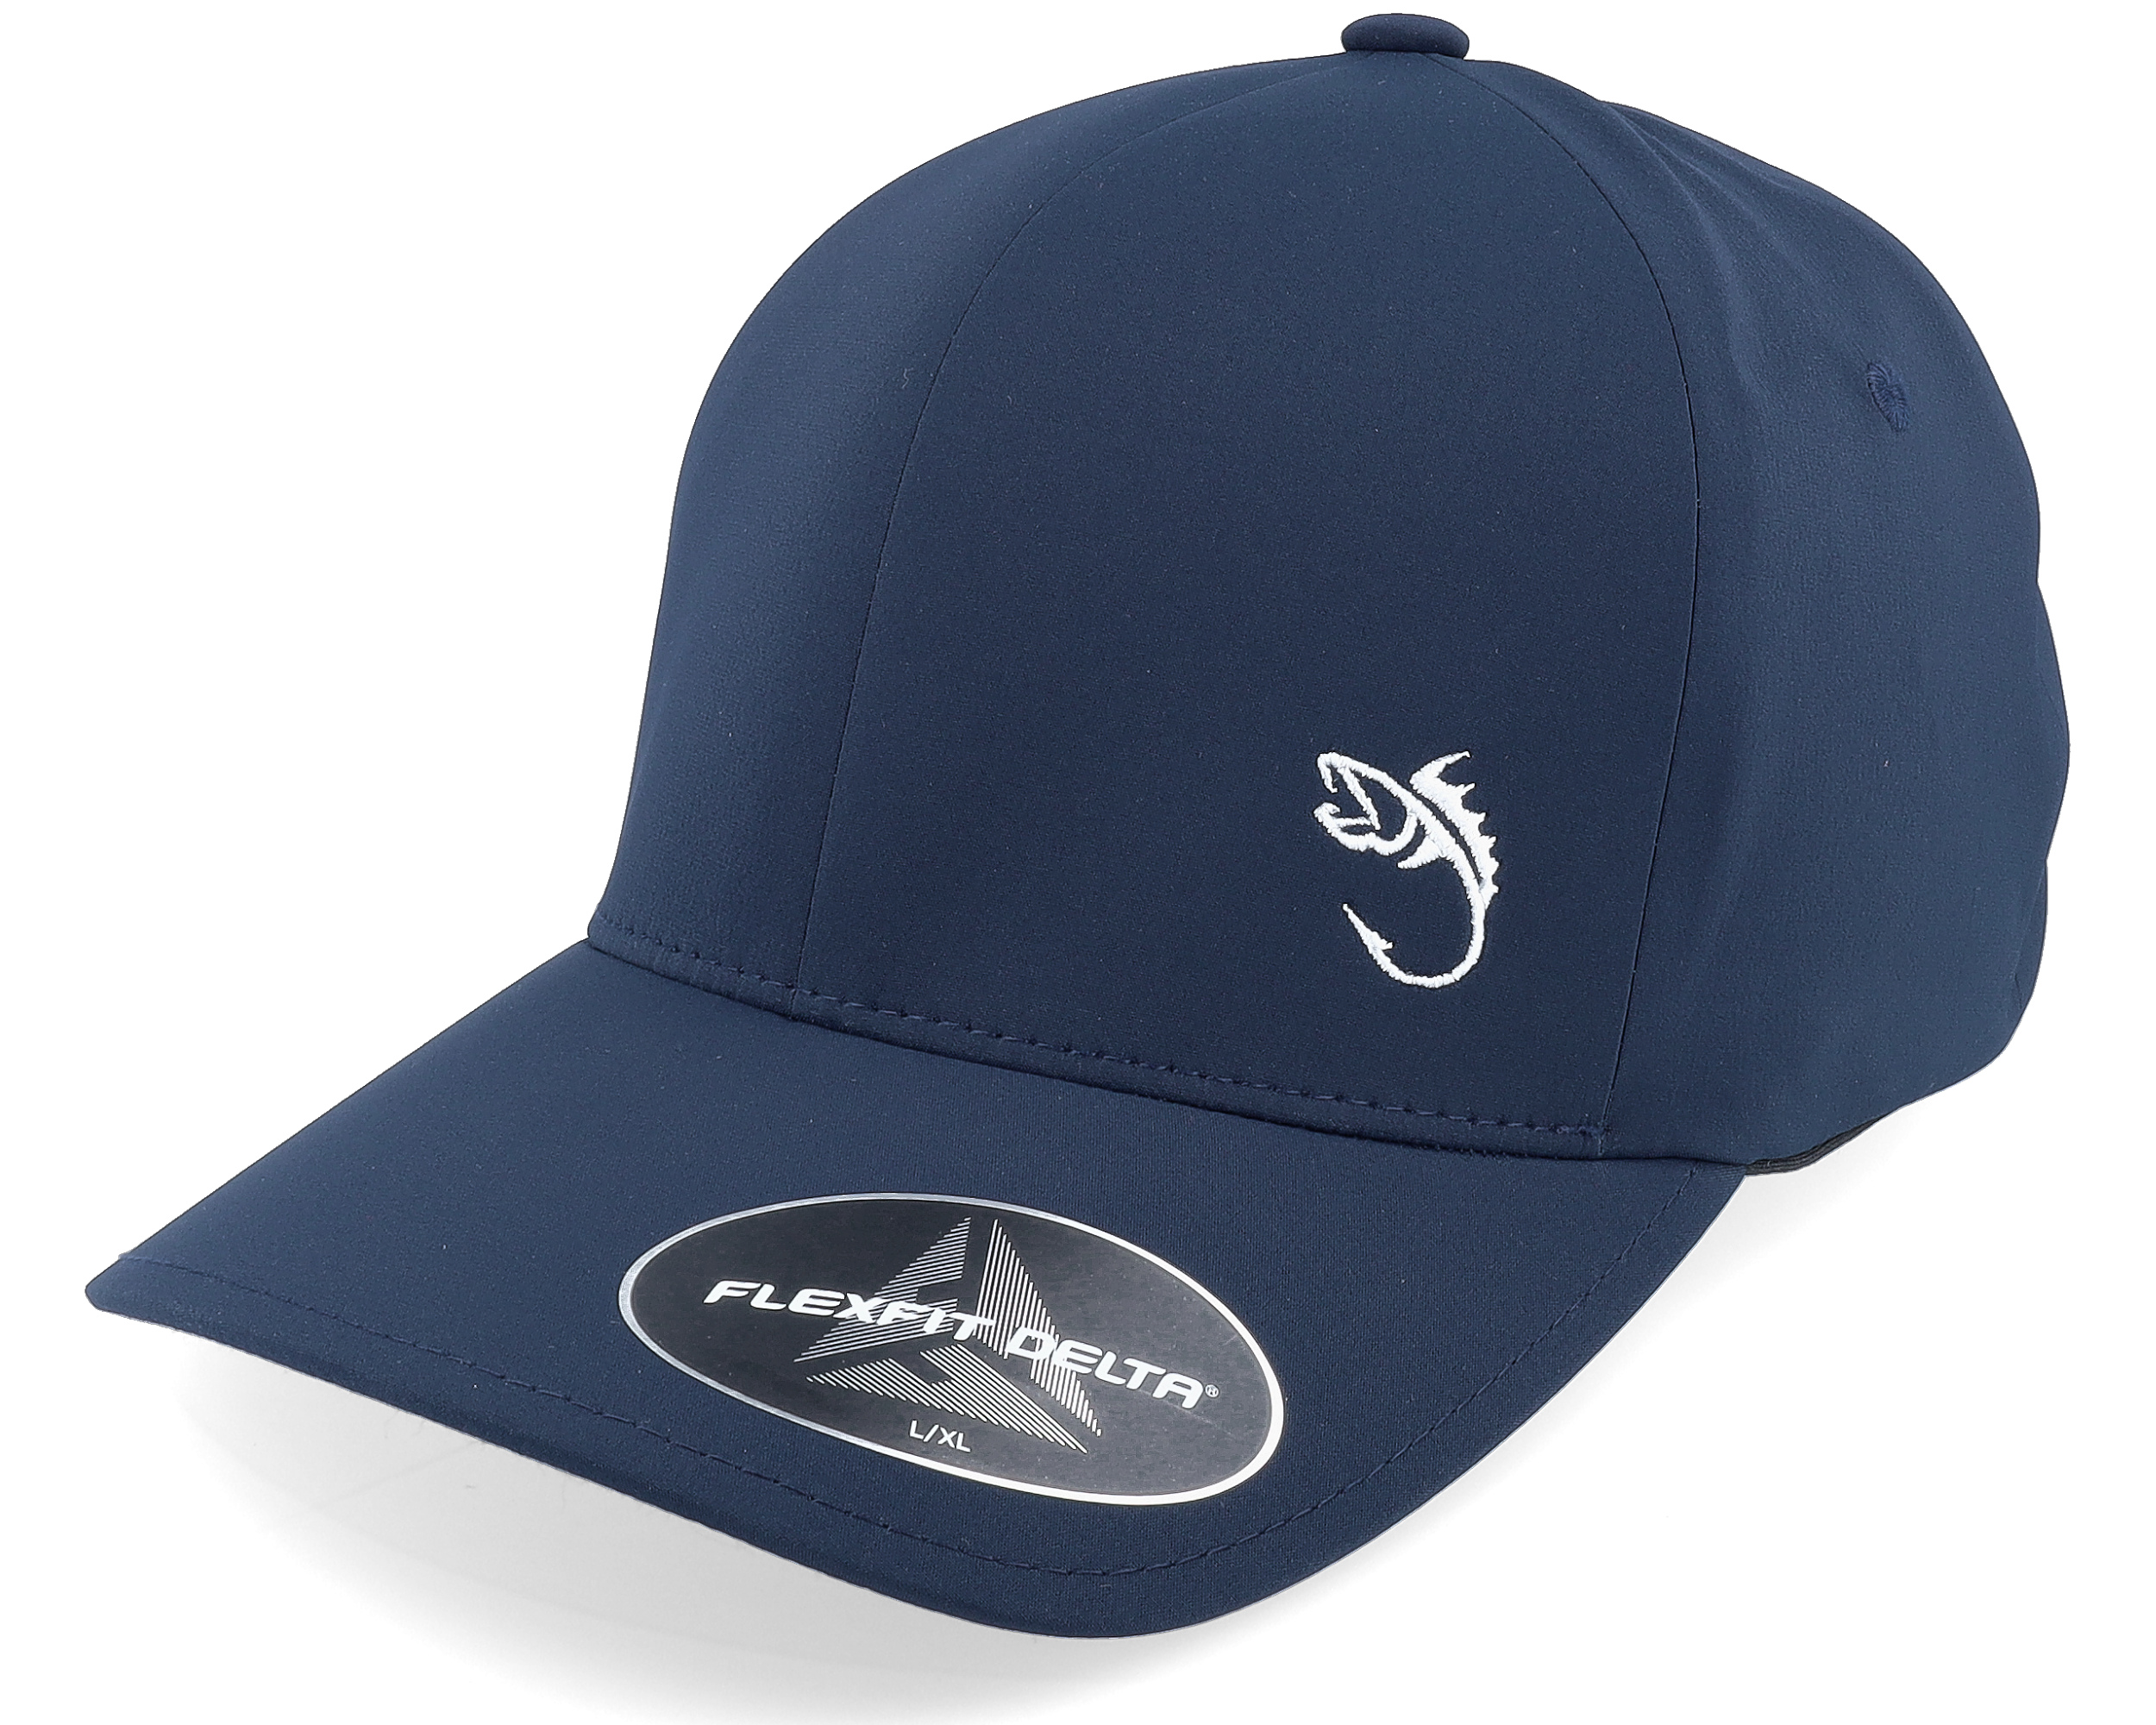 Skillfish - Blue Flexfit Cap - White Fish Hook Logo Delta Fit Navy Flexfit @ Hatstore